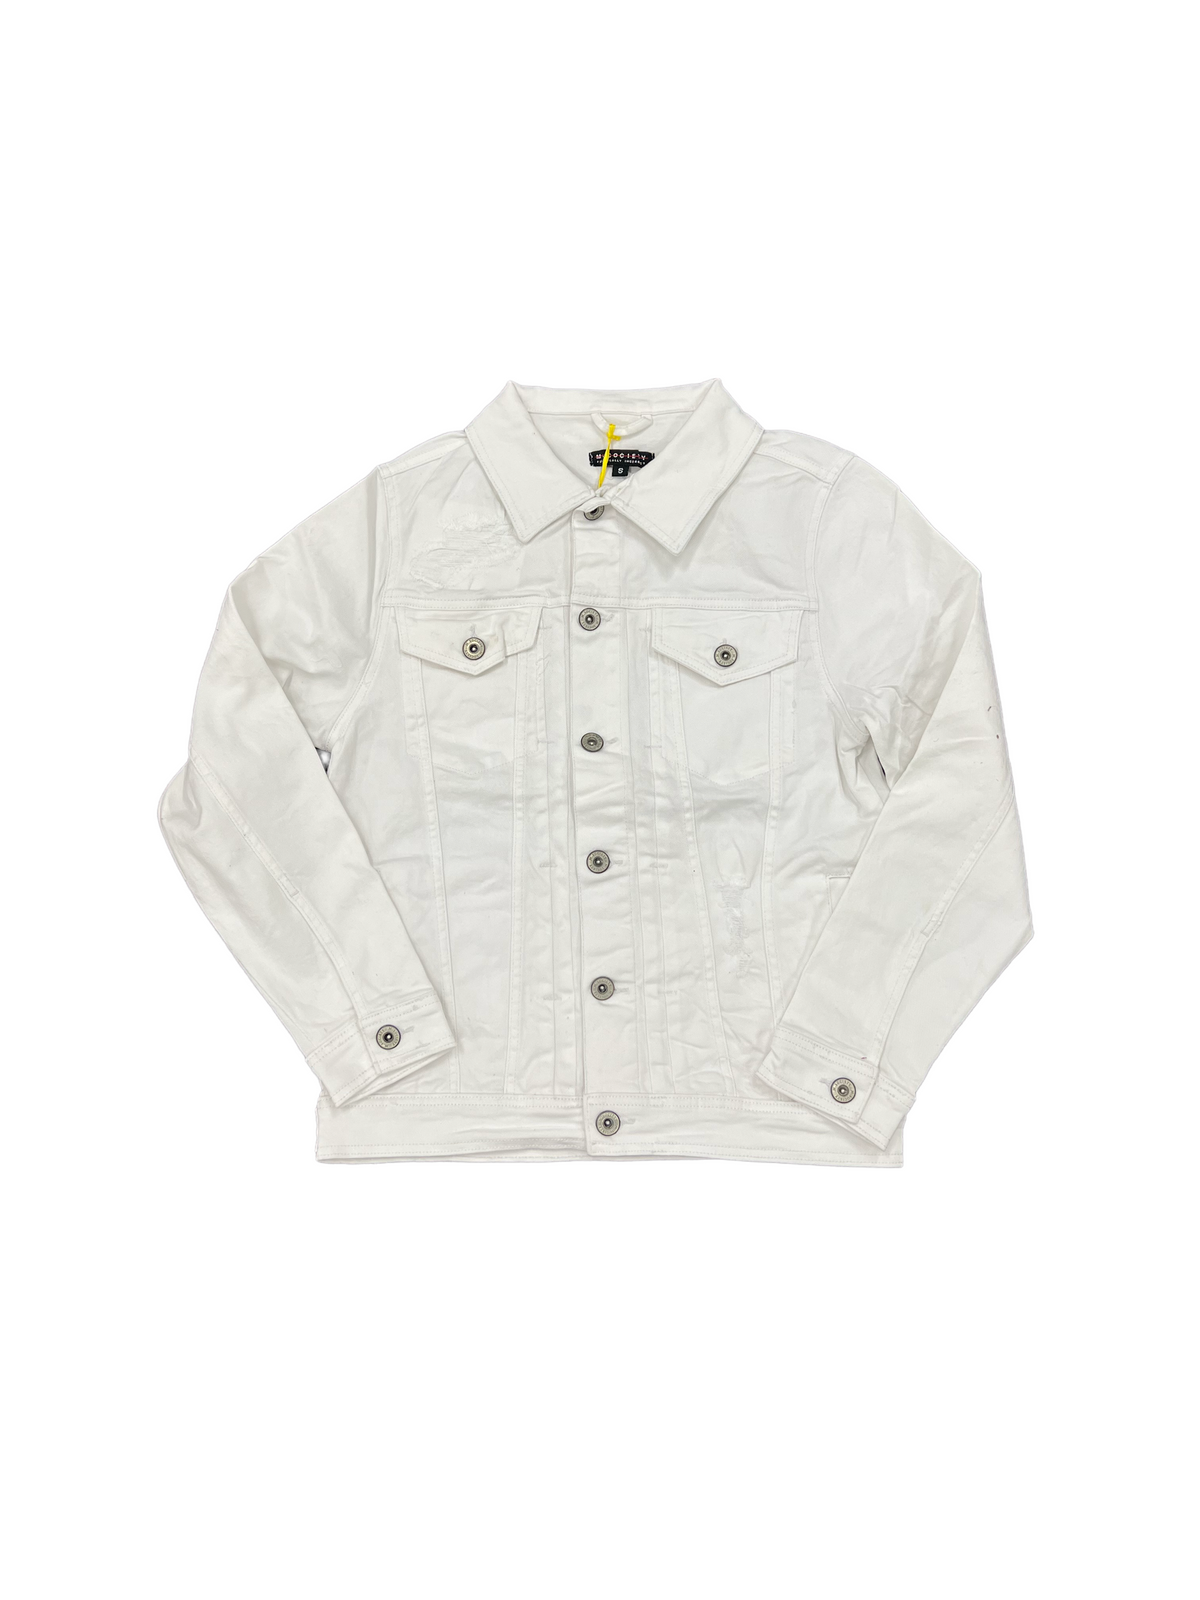 White twill Jean jacket